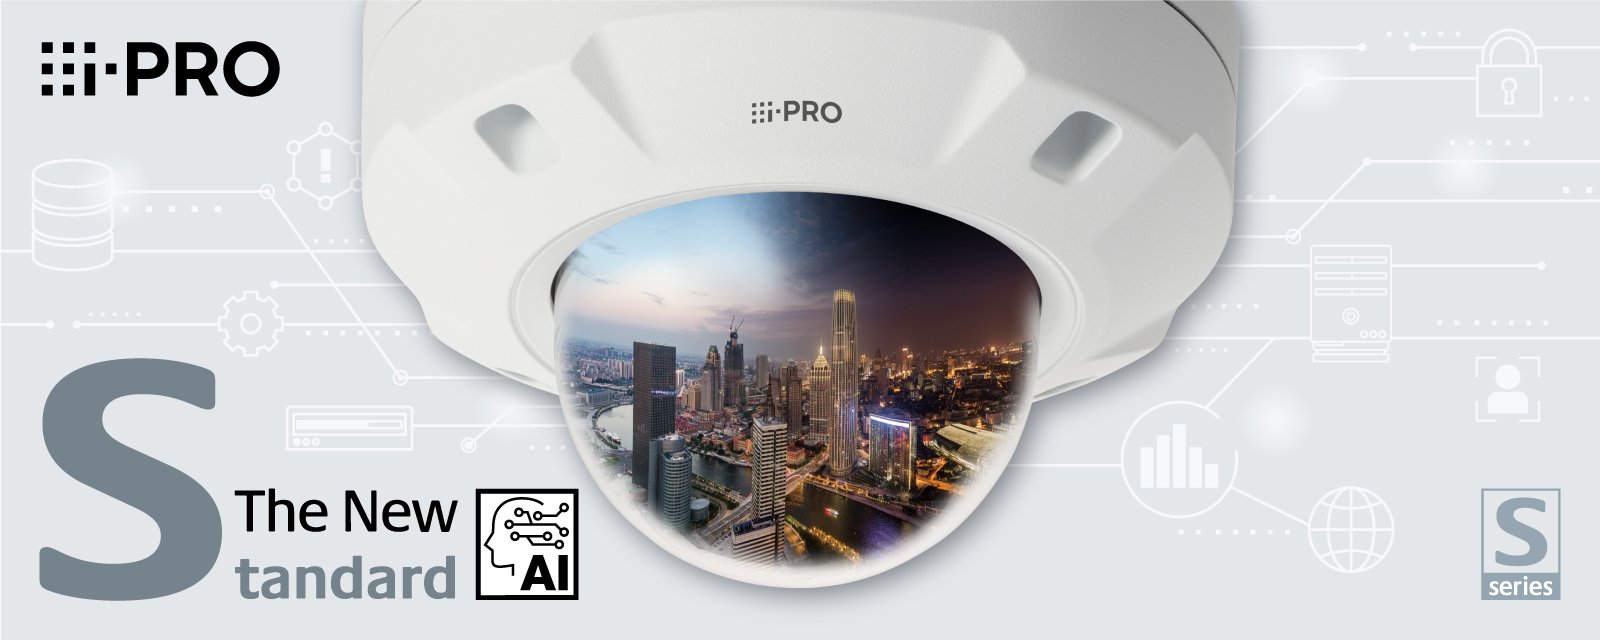 AIネットワークカメラ「i-PRO Sシリーズ」イメージ